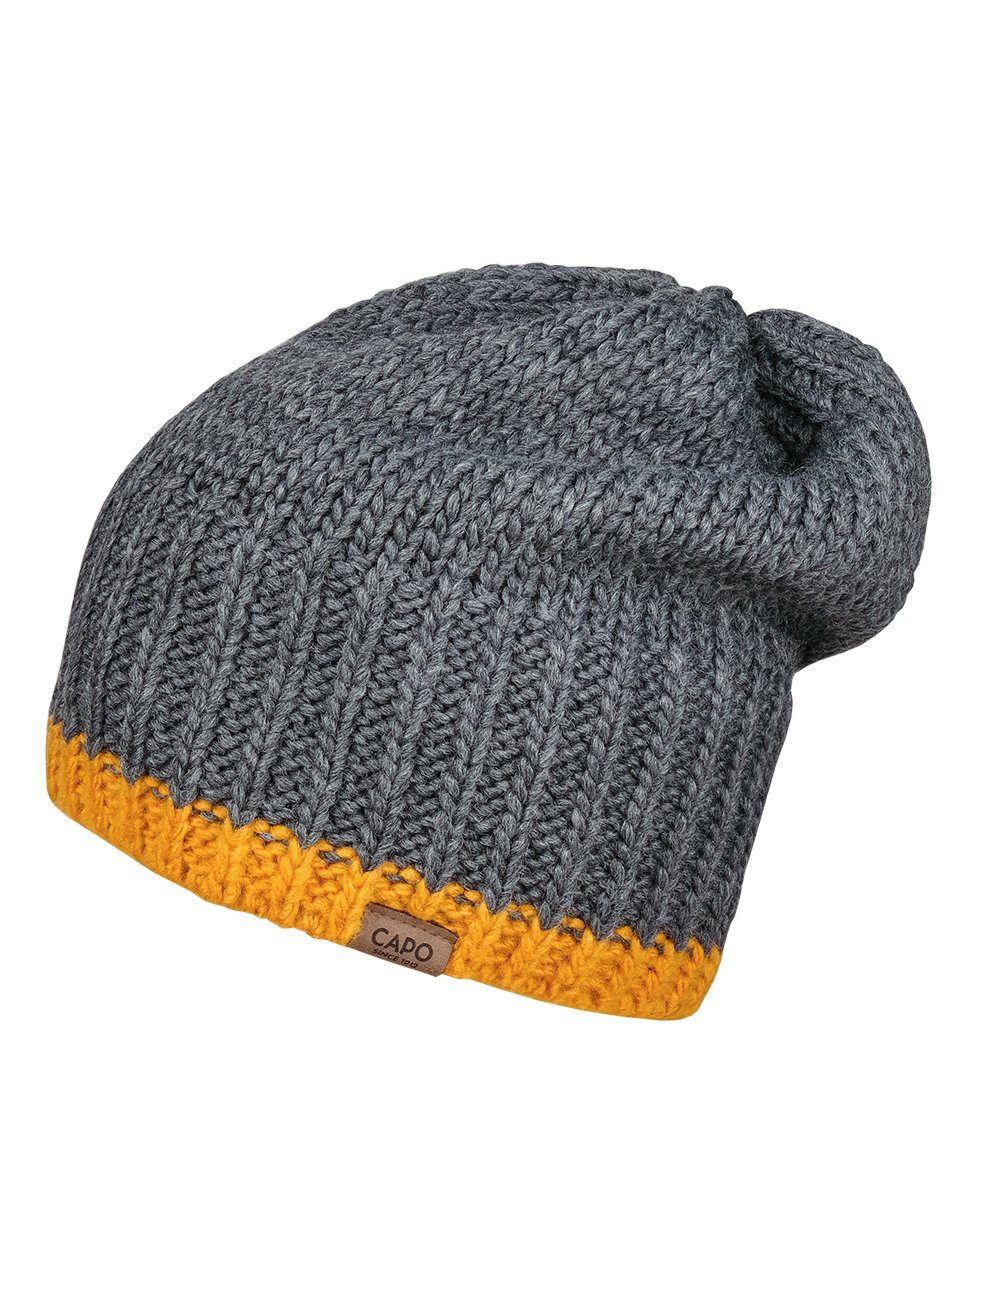 CAPO Strickmütze CAPO-KEELIN CAP knitted cap, short fleece lining Made in Germany granite